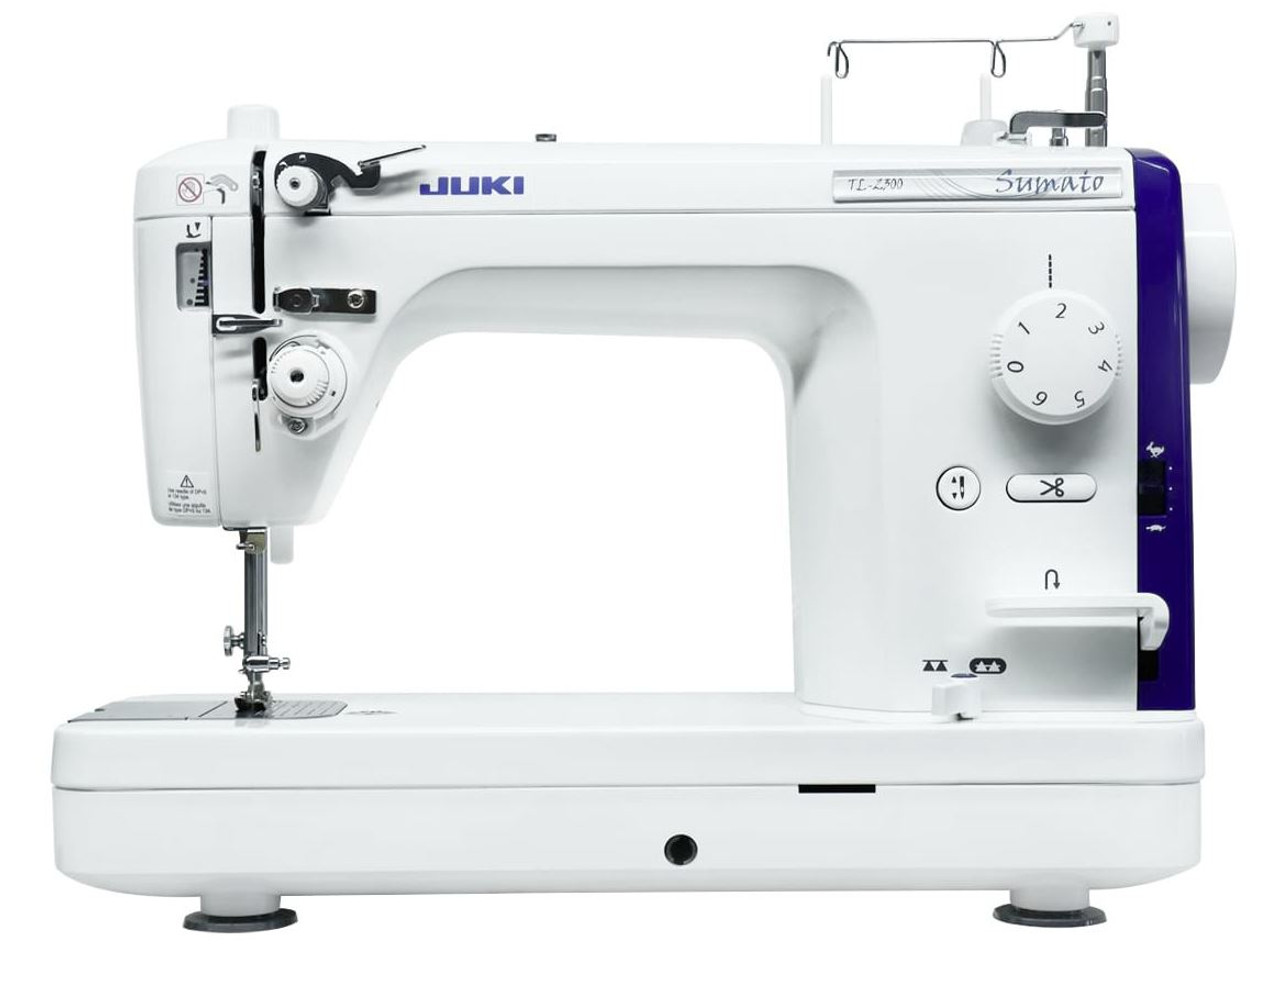 Maquina de coser Juki TL 2300 Sumato